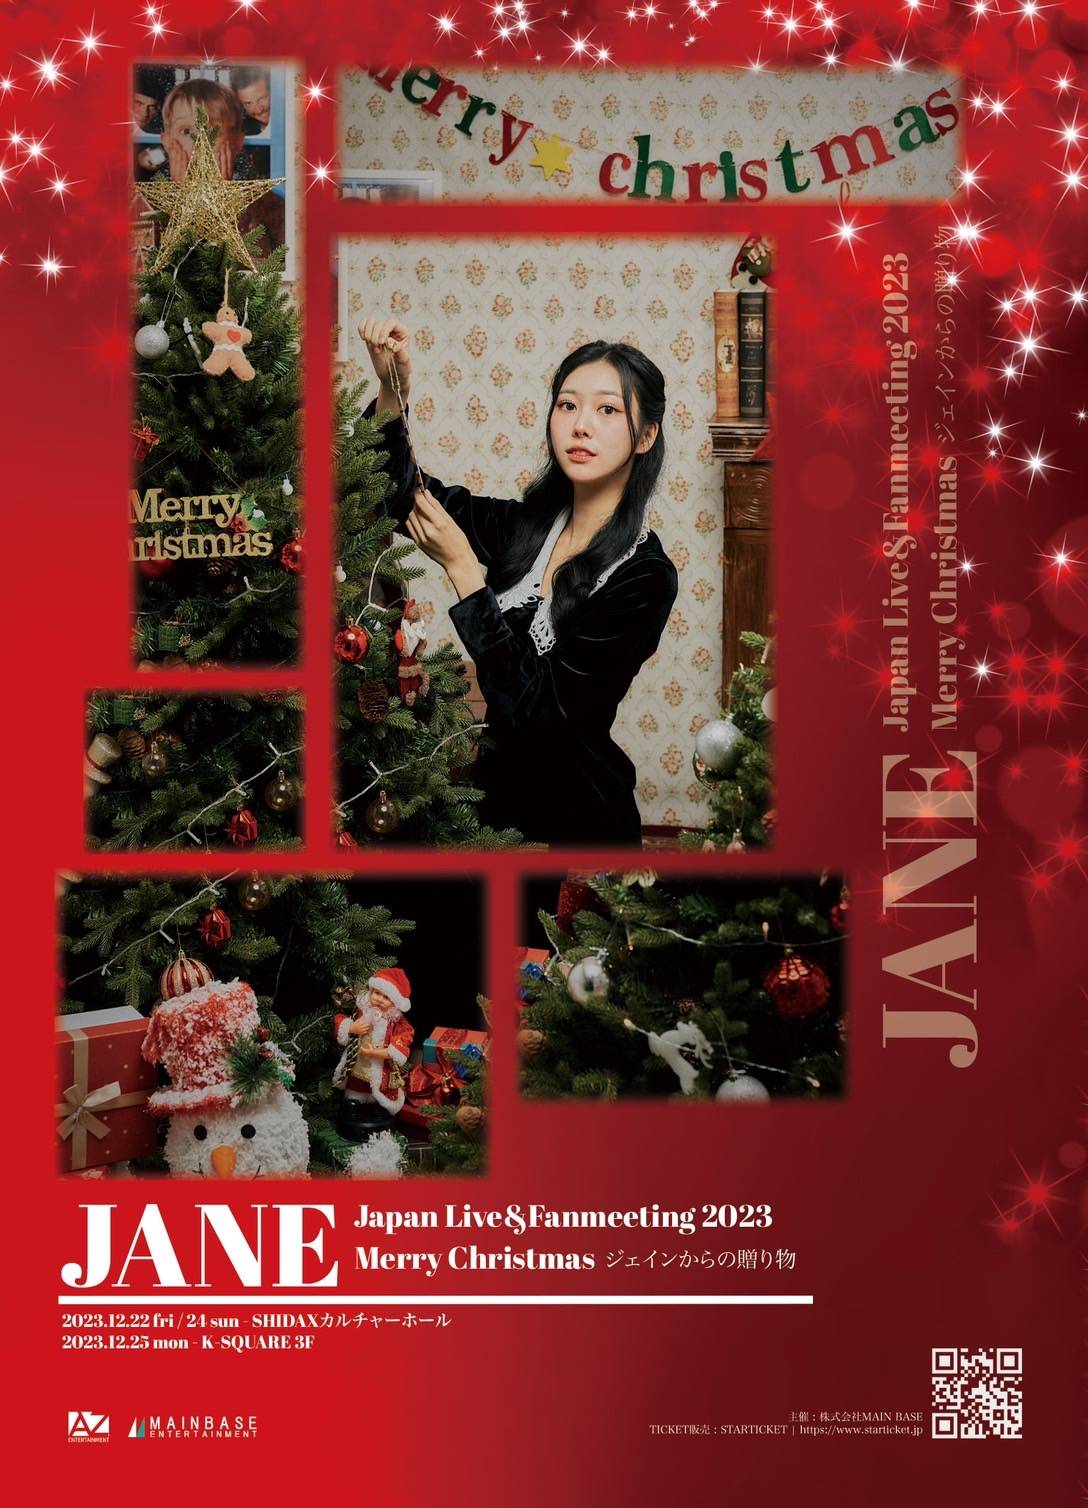 JANE Japan Live&Fanmeeting 2023 -Merry Christmas ジェインからの贈り物-